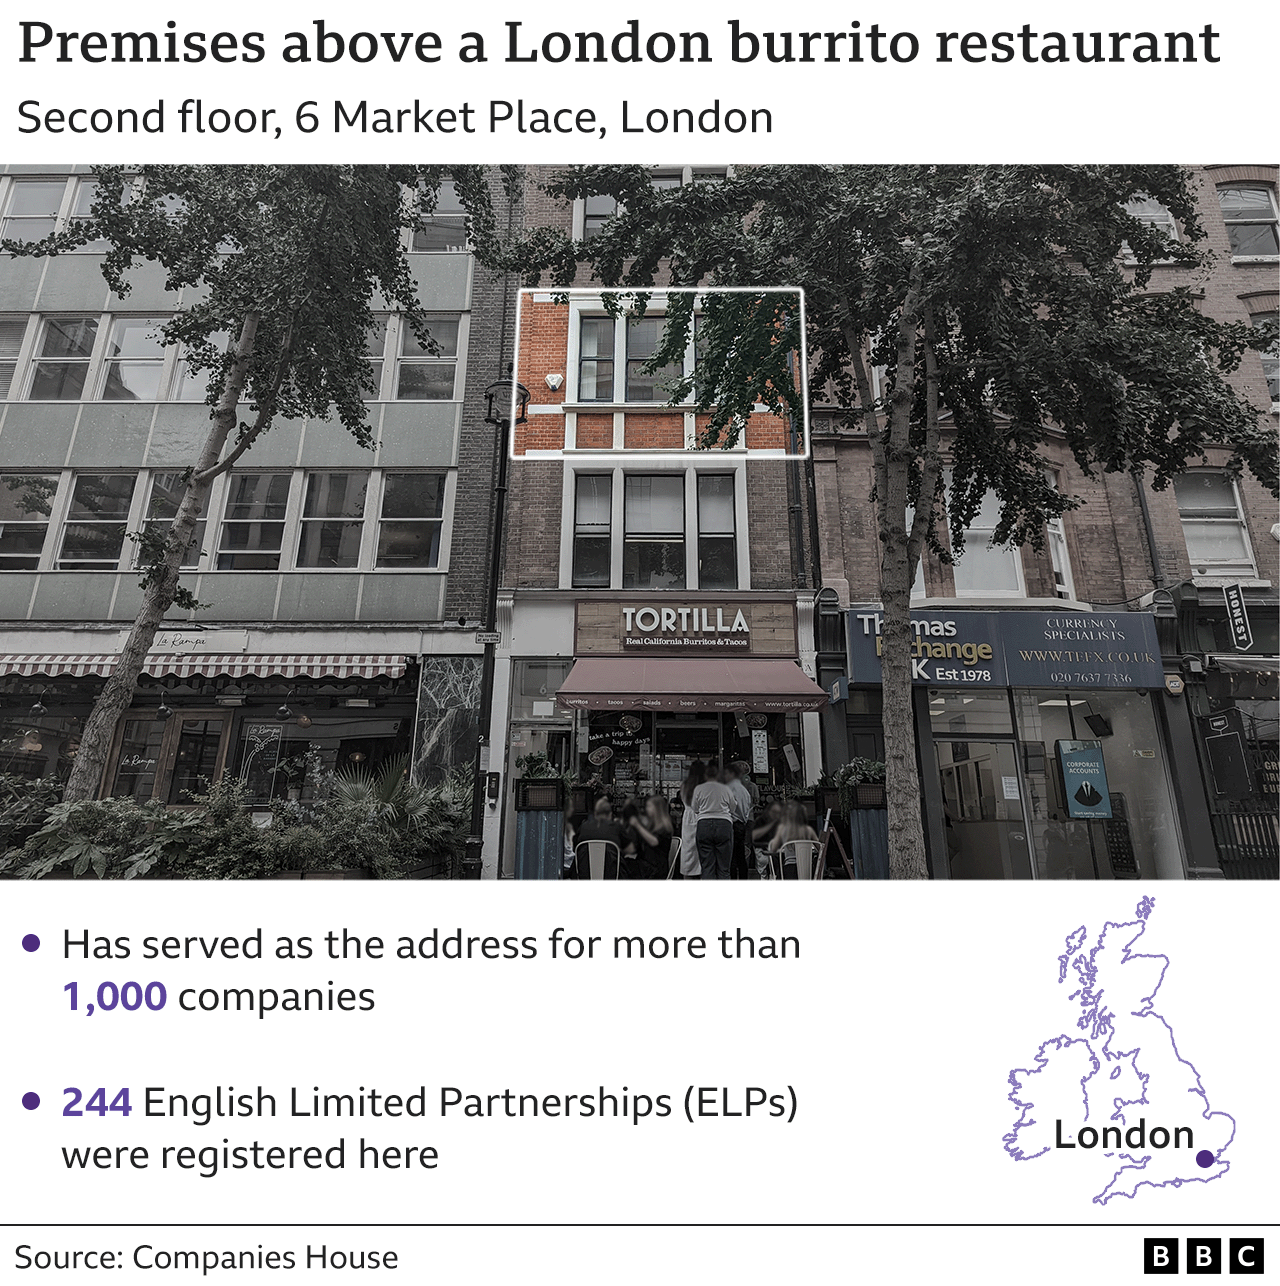 Premises above a London burrito restaurant